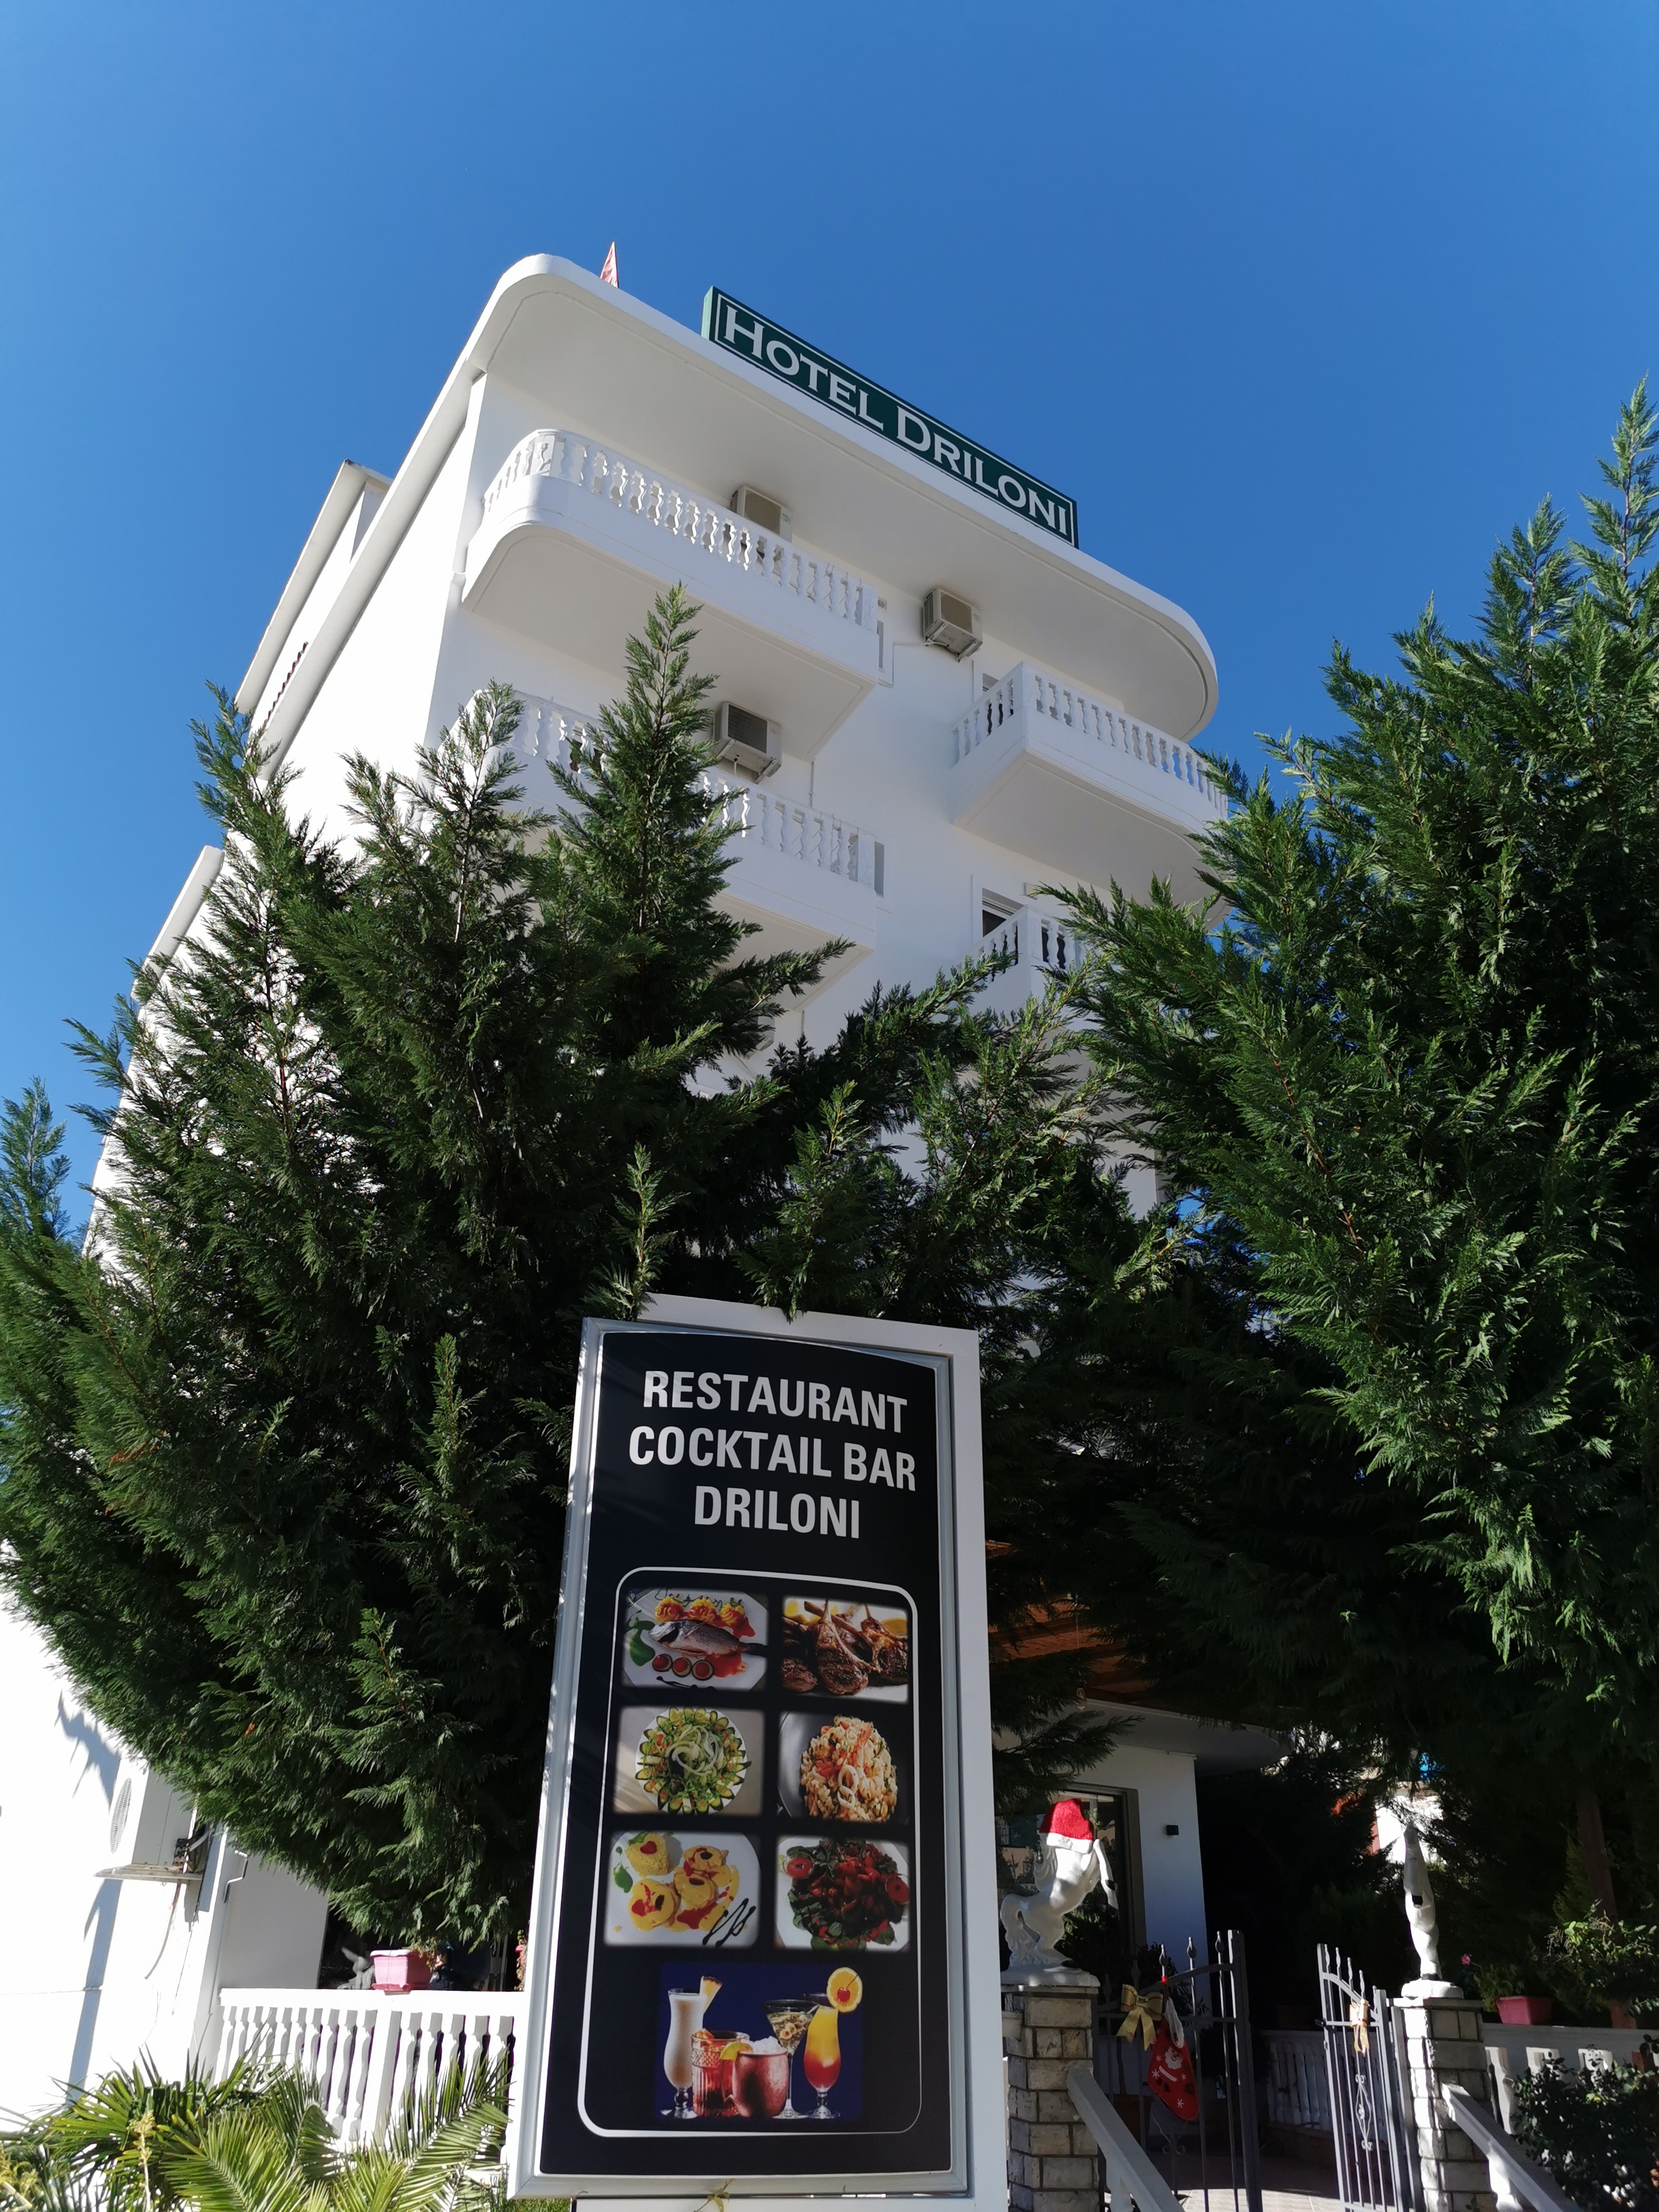 Letovanje Albanija hoteli, Ksamil, autobus, Hotel Drilon, spolja